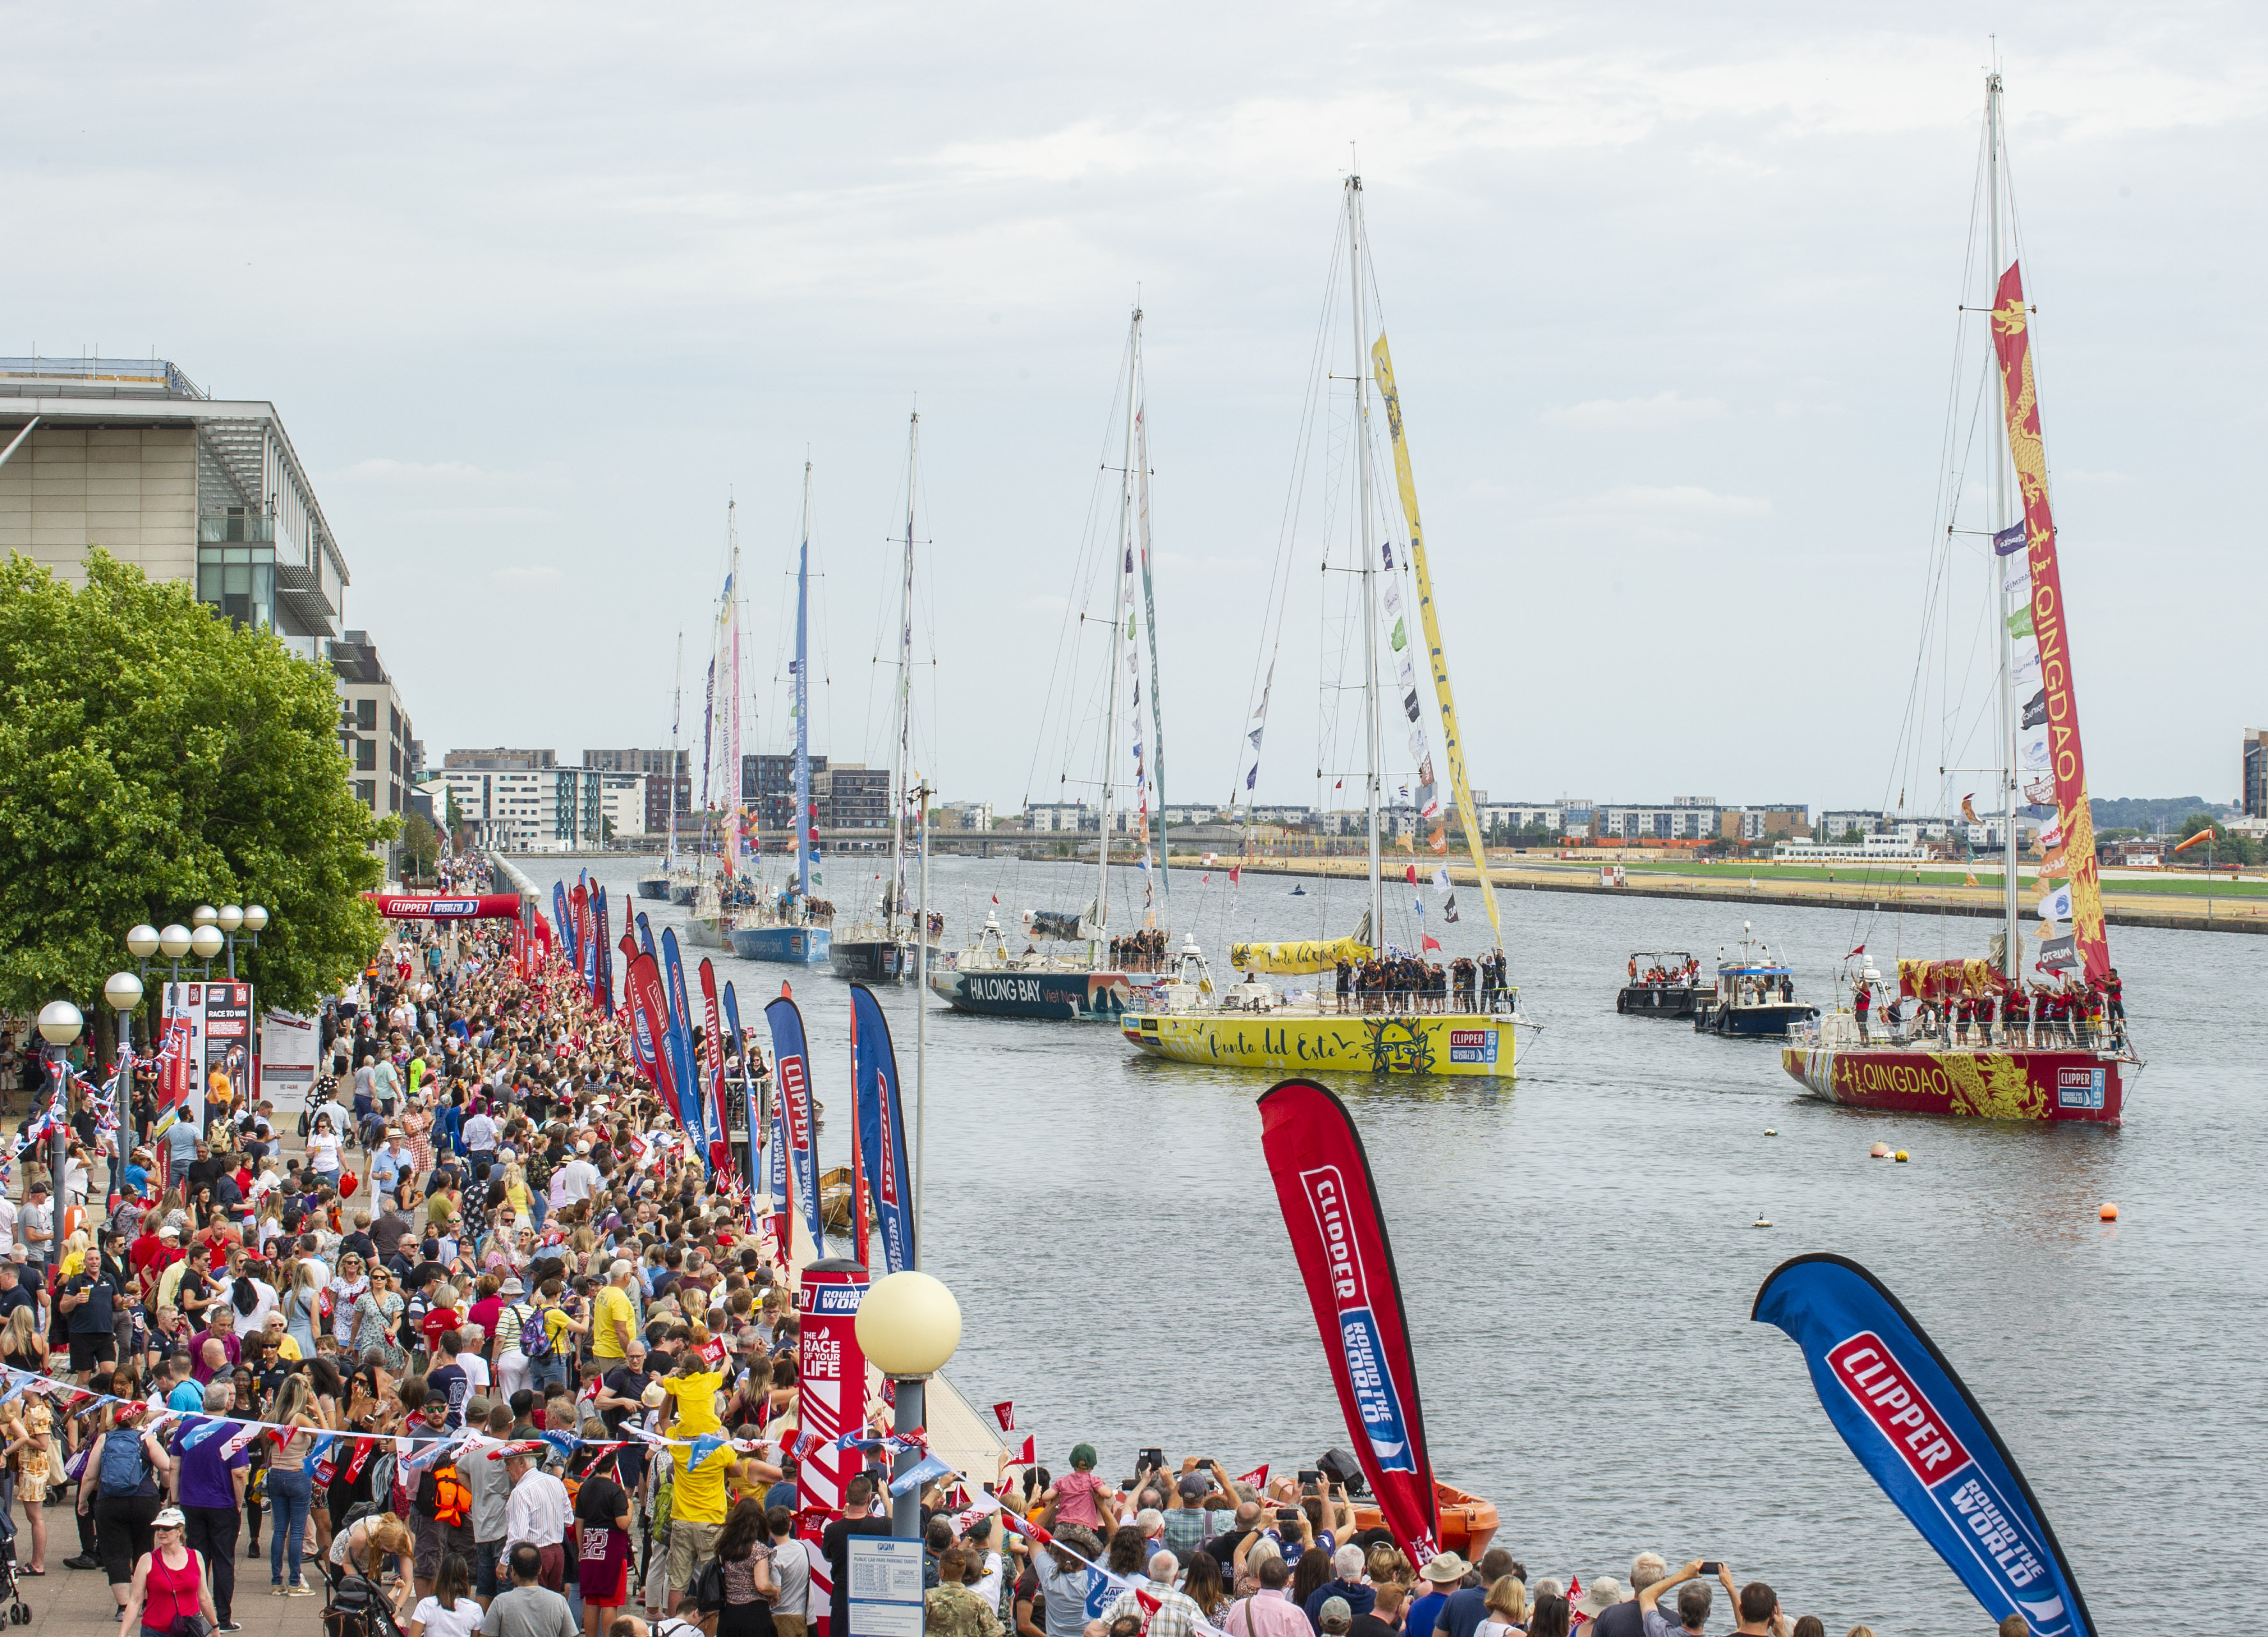 Clipper Race Fleet Parade of Sail at Race Finish in London's Royal Docks